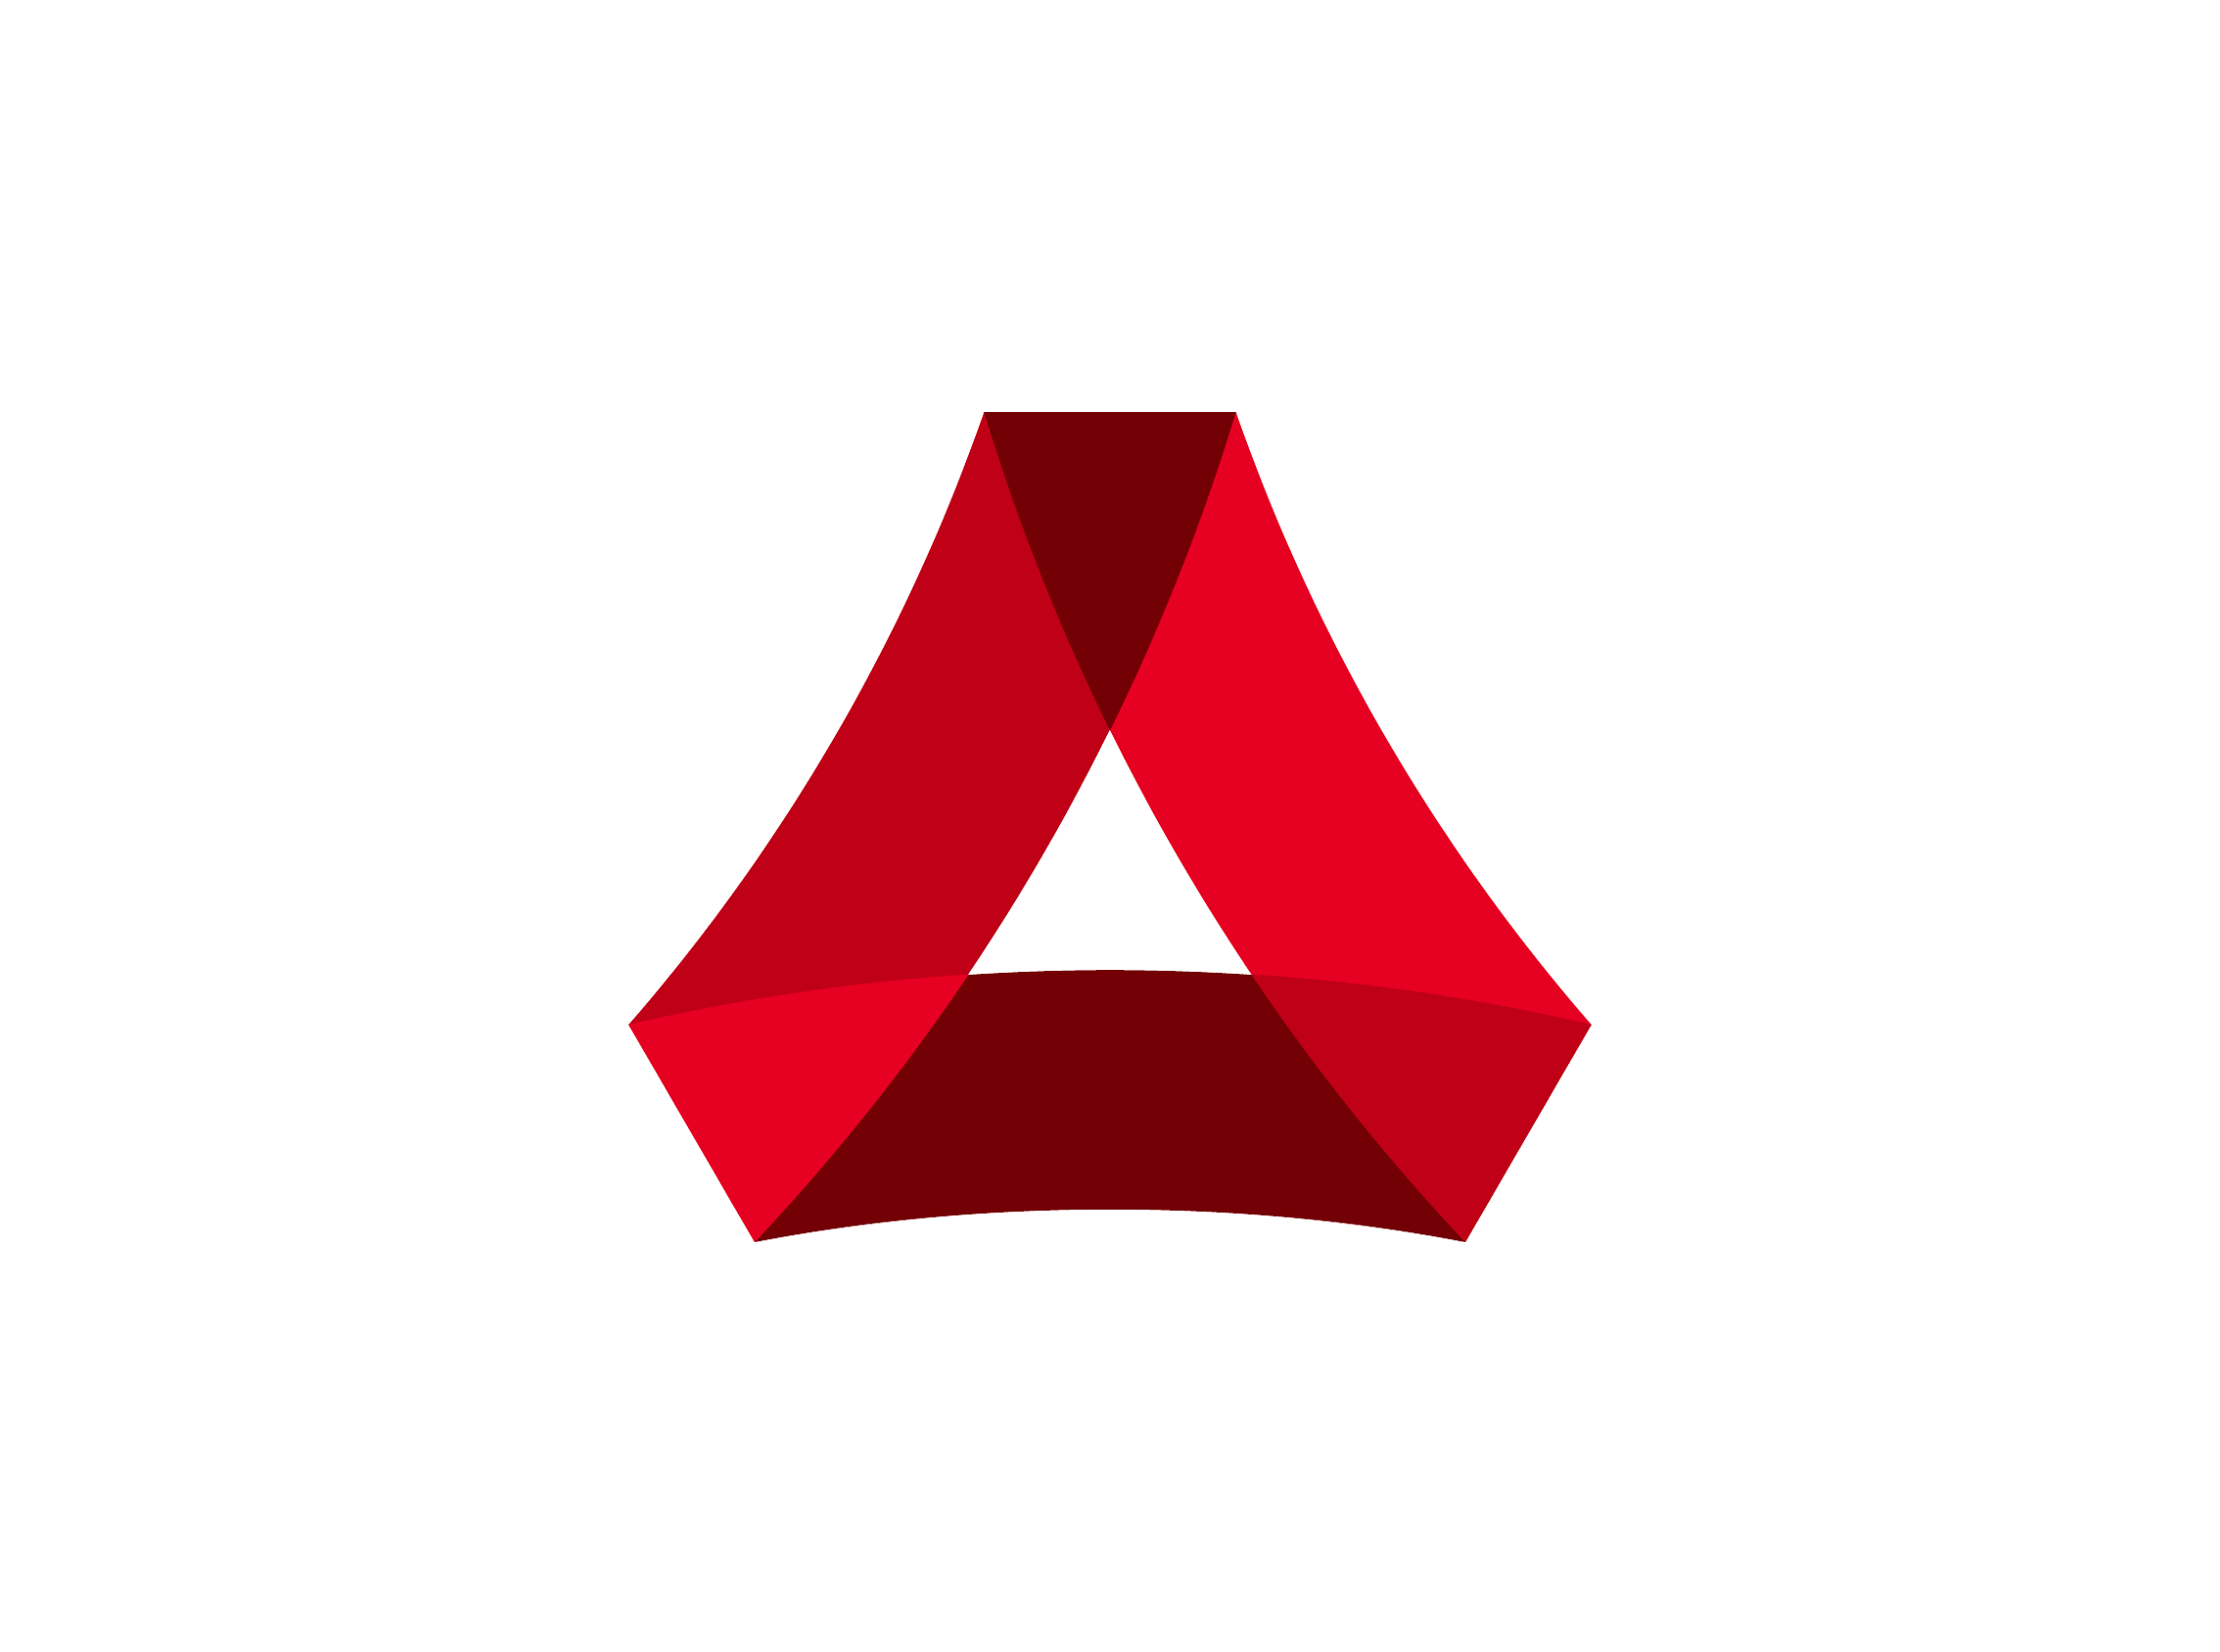 White Box with Red Triangle Logo - White Box With Red Triangle Logo | www.topsimages.com